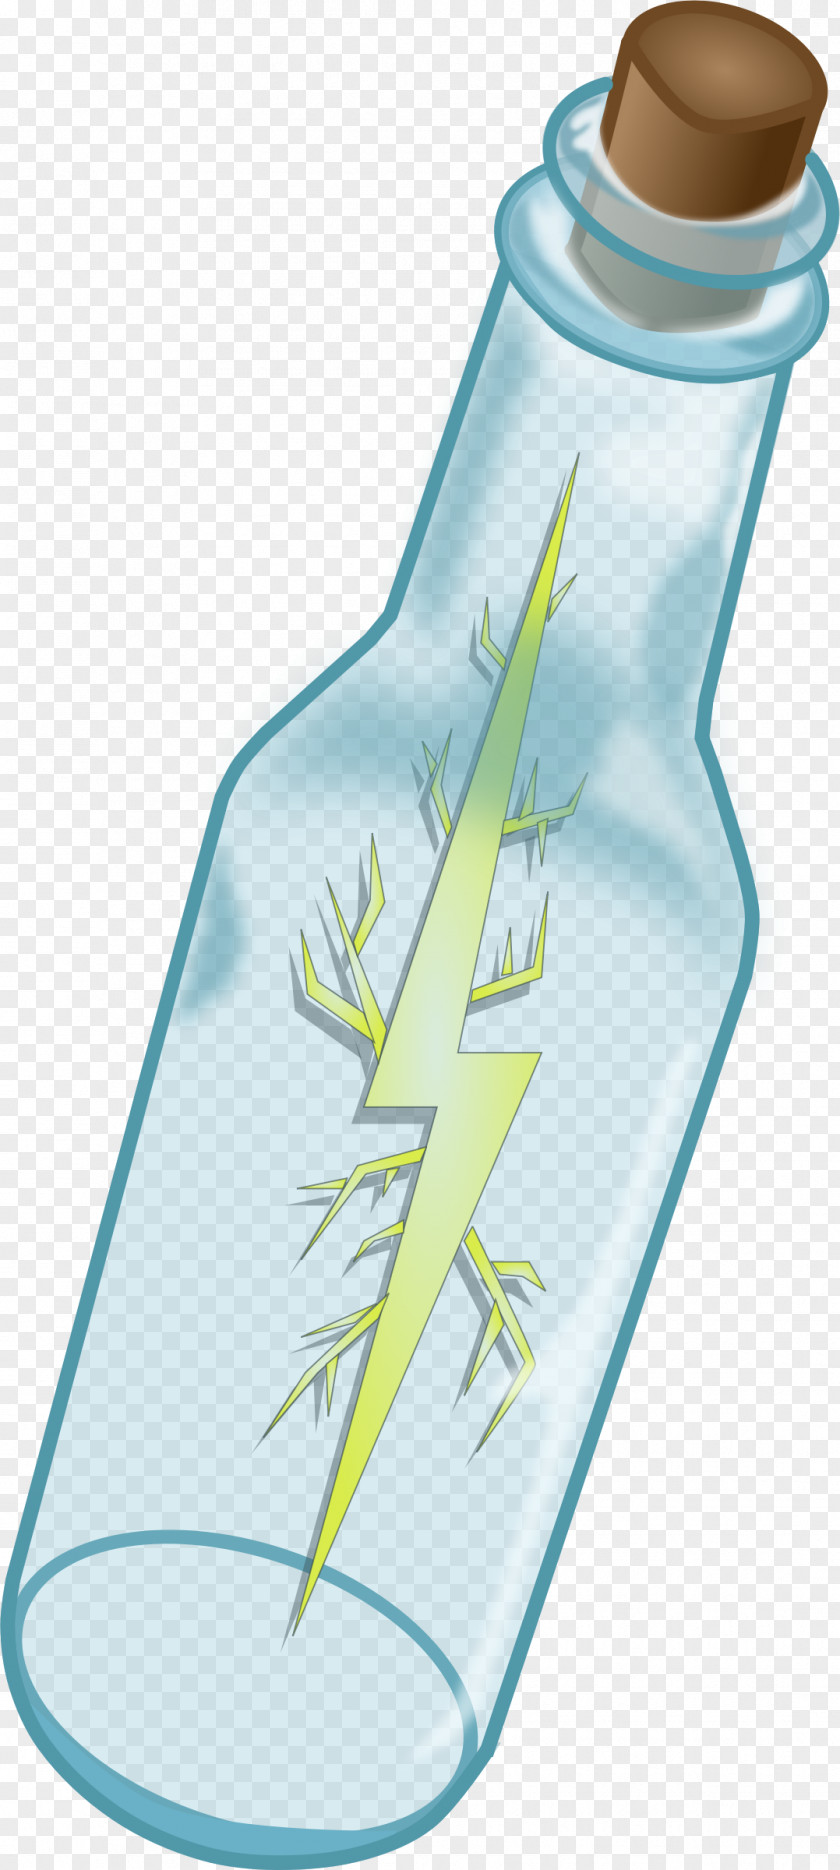 Bottle Lightning In A Clip Art PNG